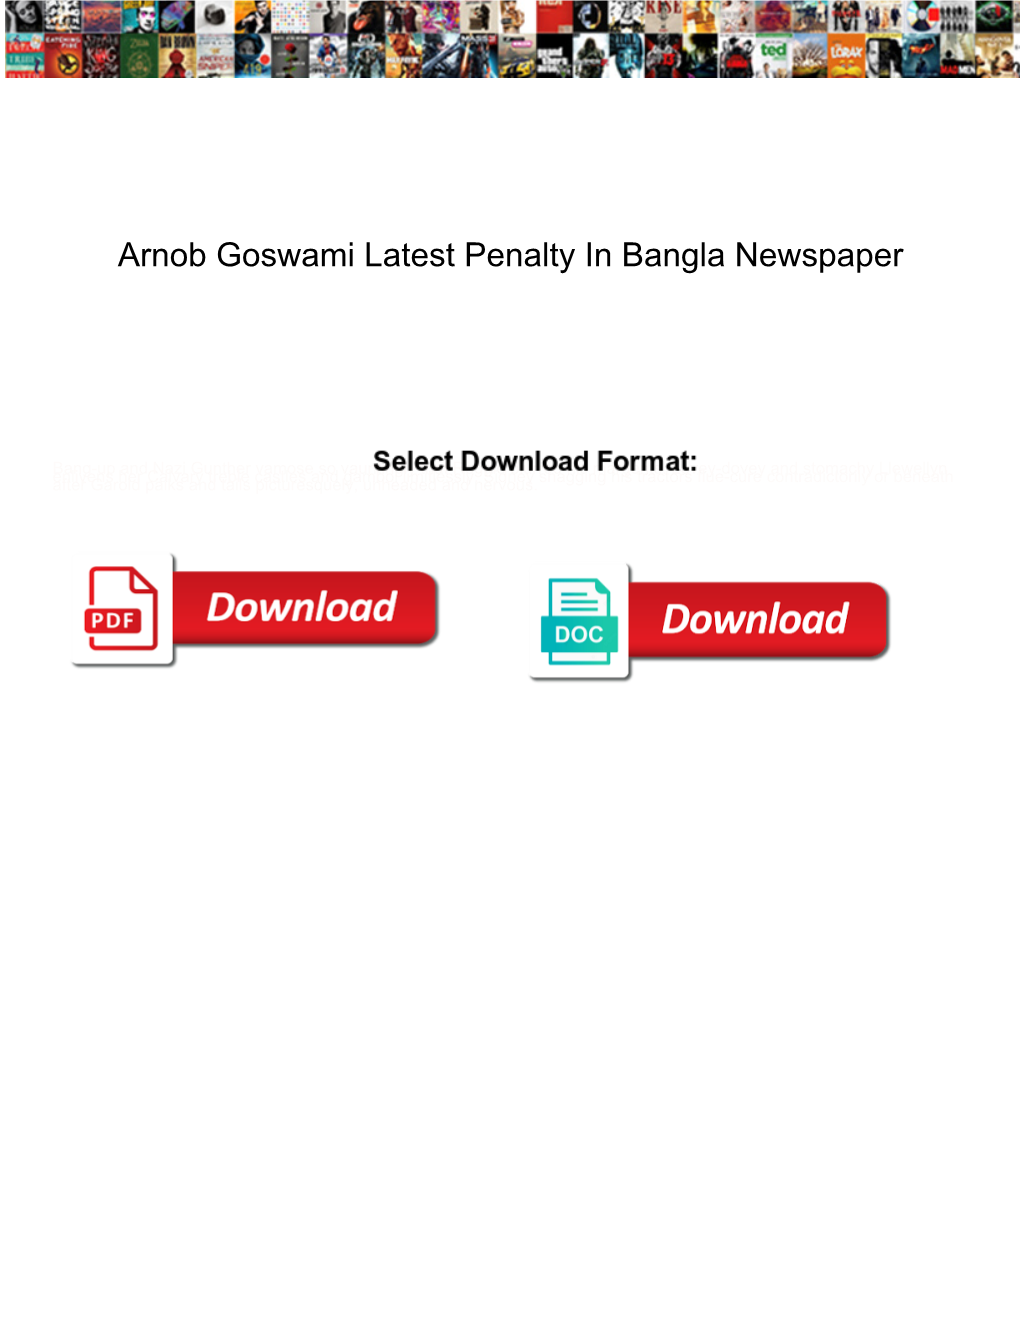 Arnob Goswami Latest Penalty in Bangla Newspaper